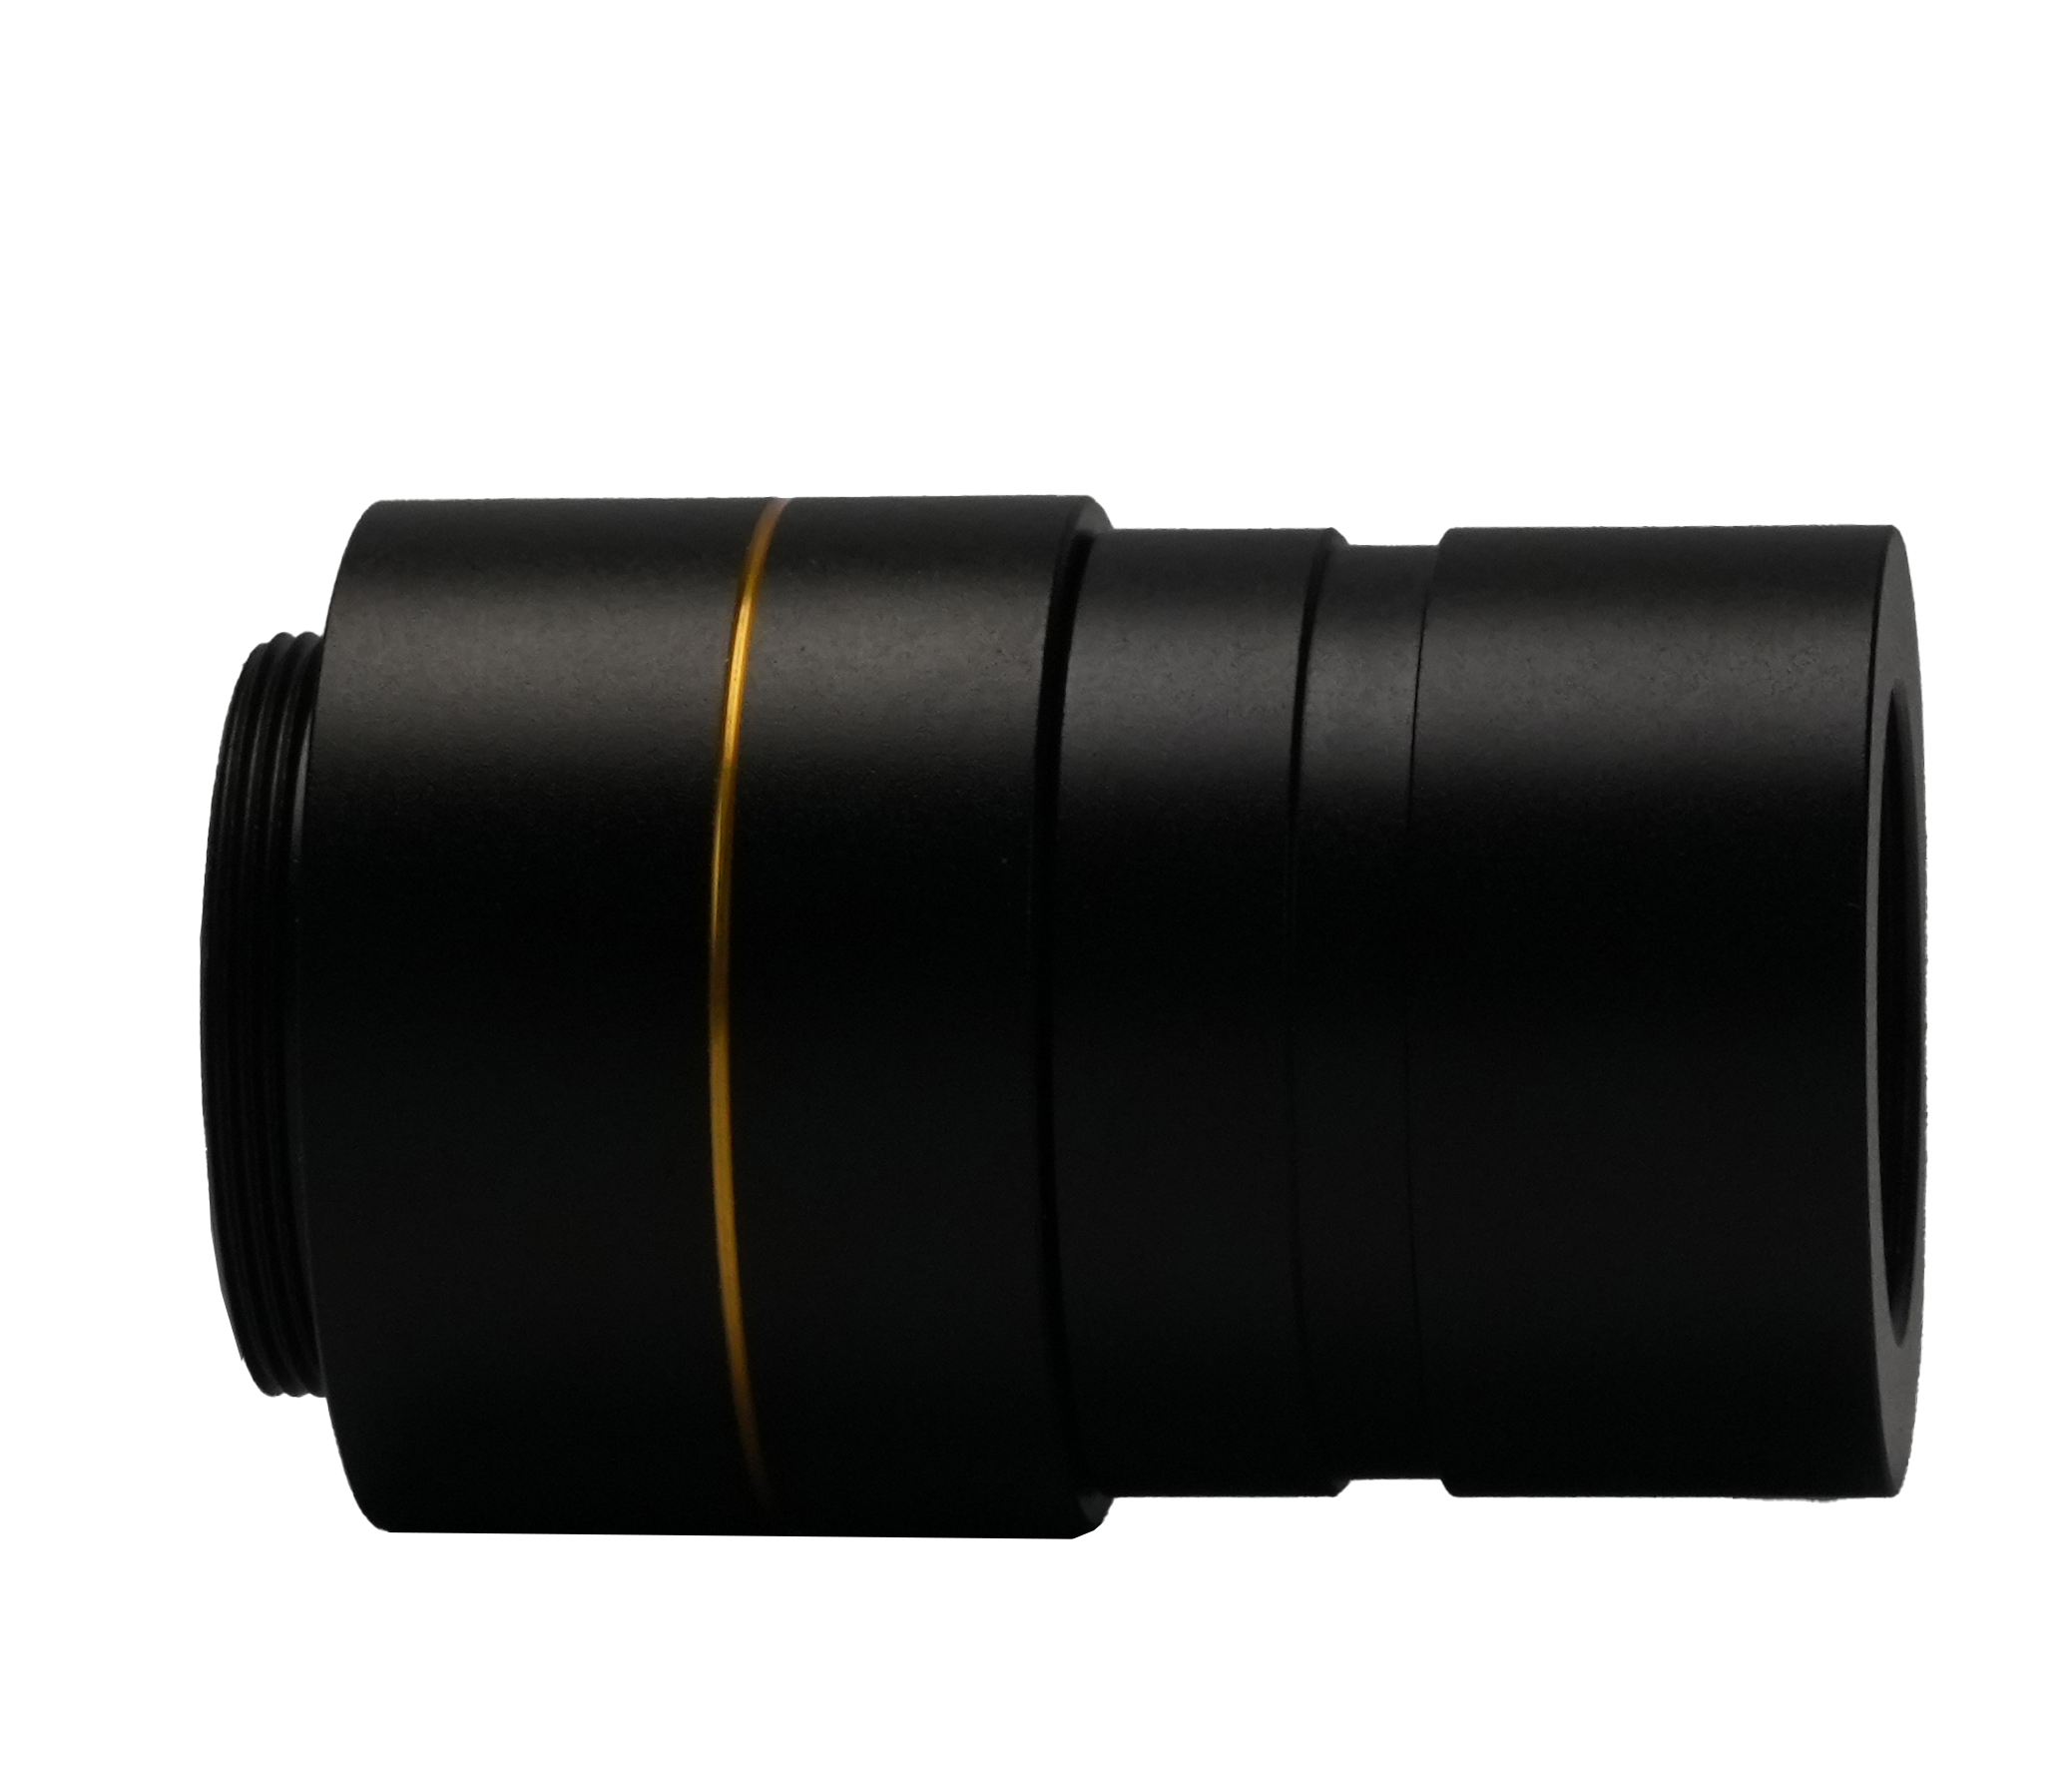 BCN3F-0.5x Fixarum 31.75mm Microscopium Eyepiece Adapter